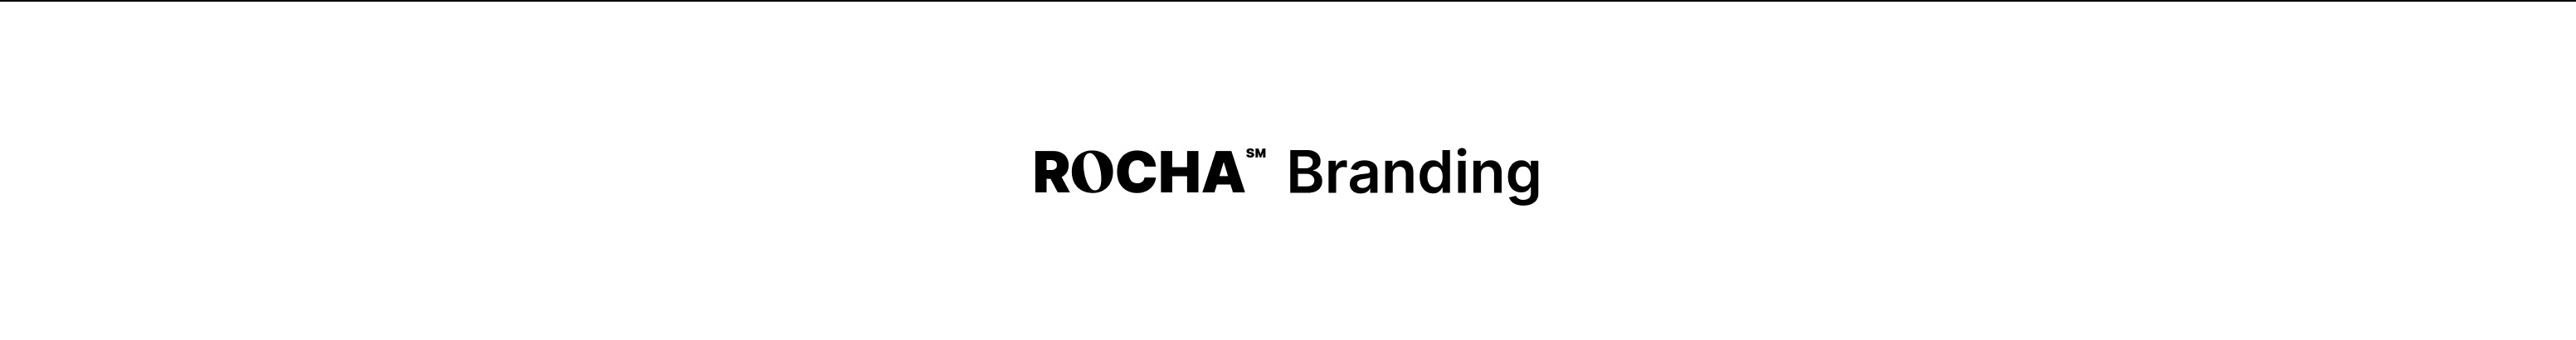 Thiago ROCHA's profile banner